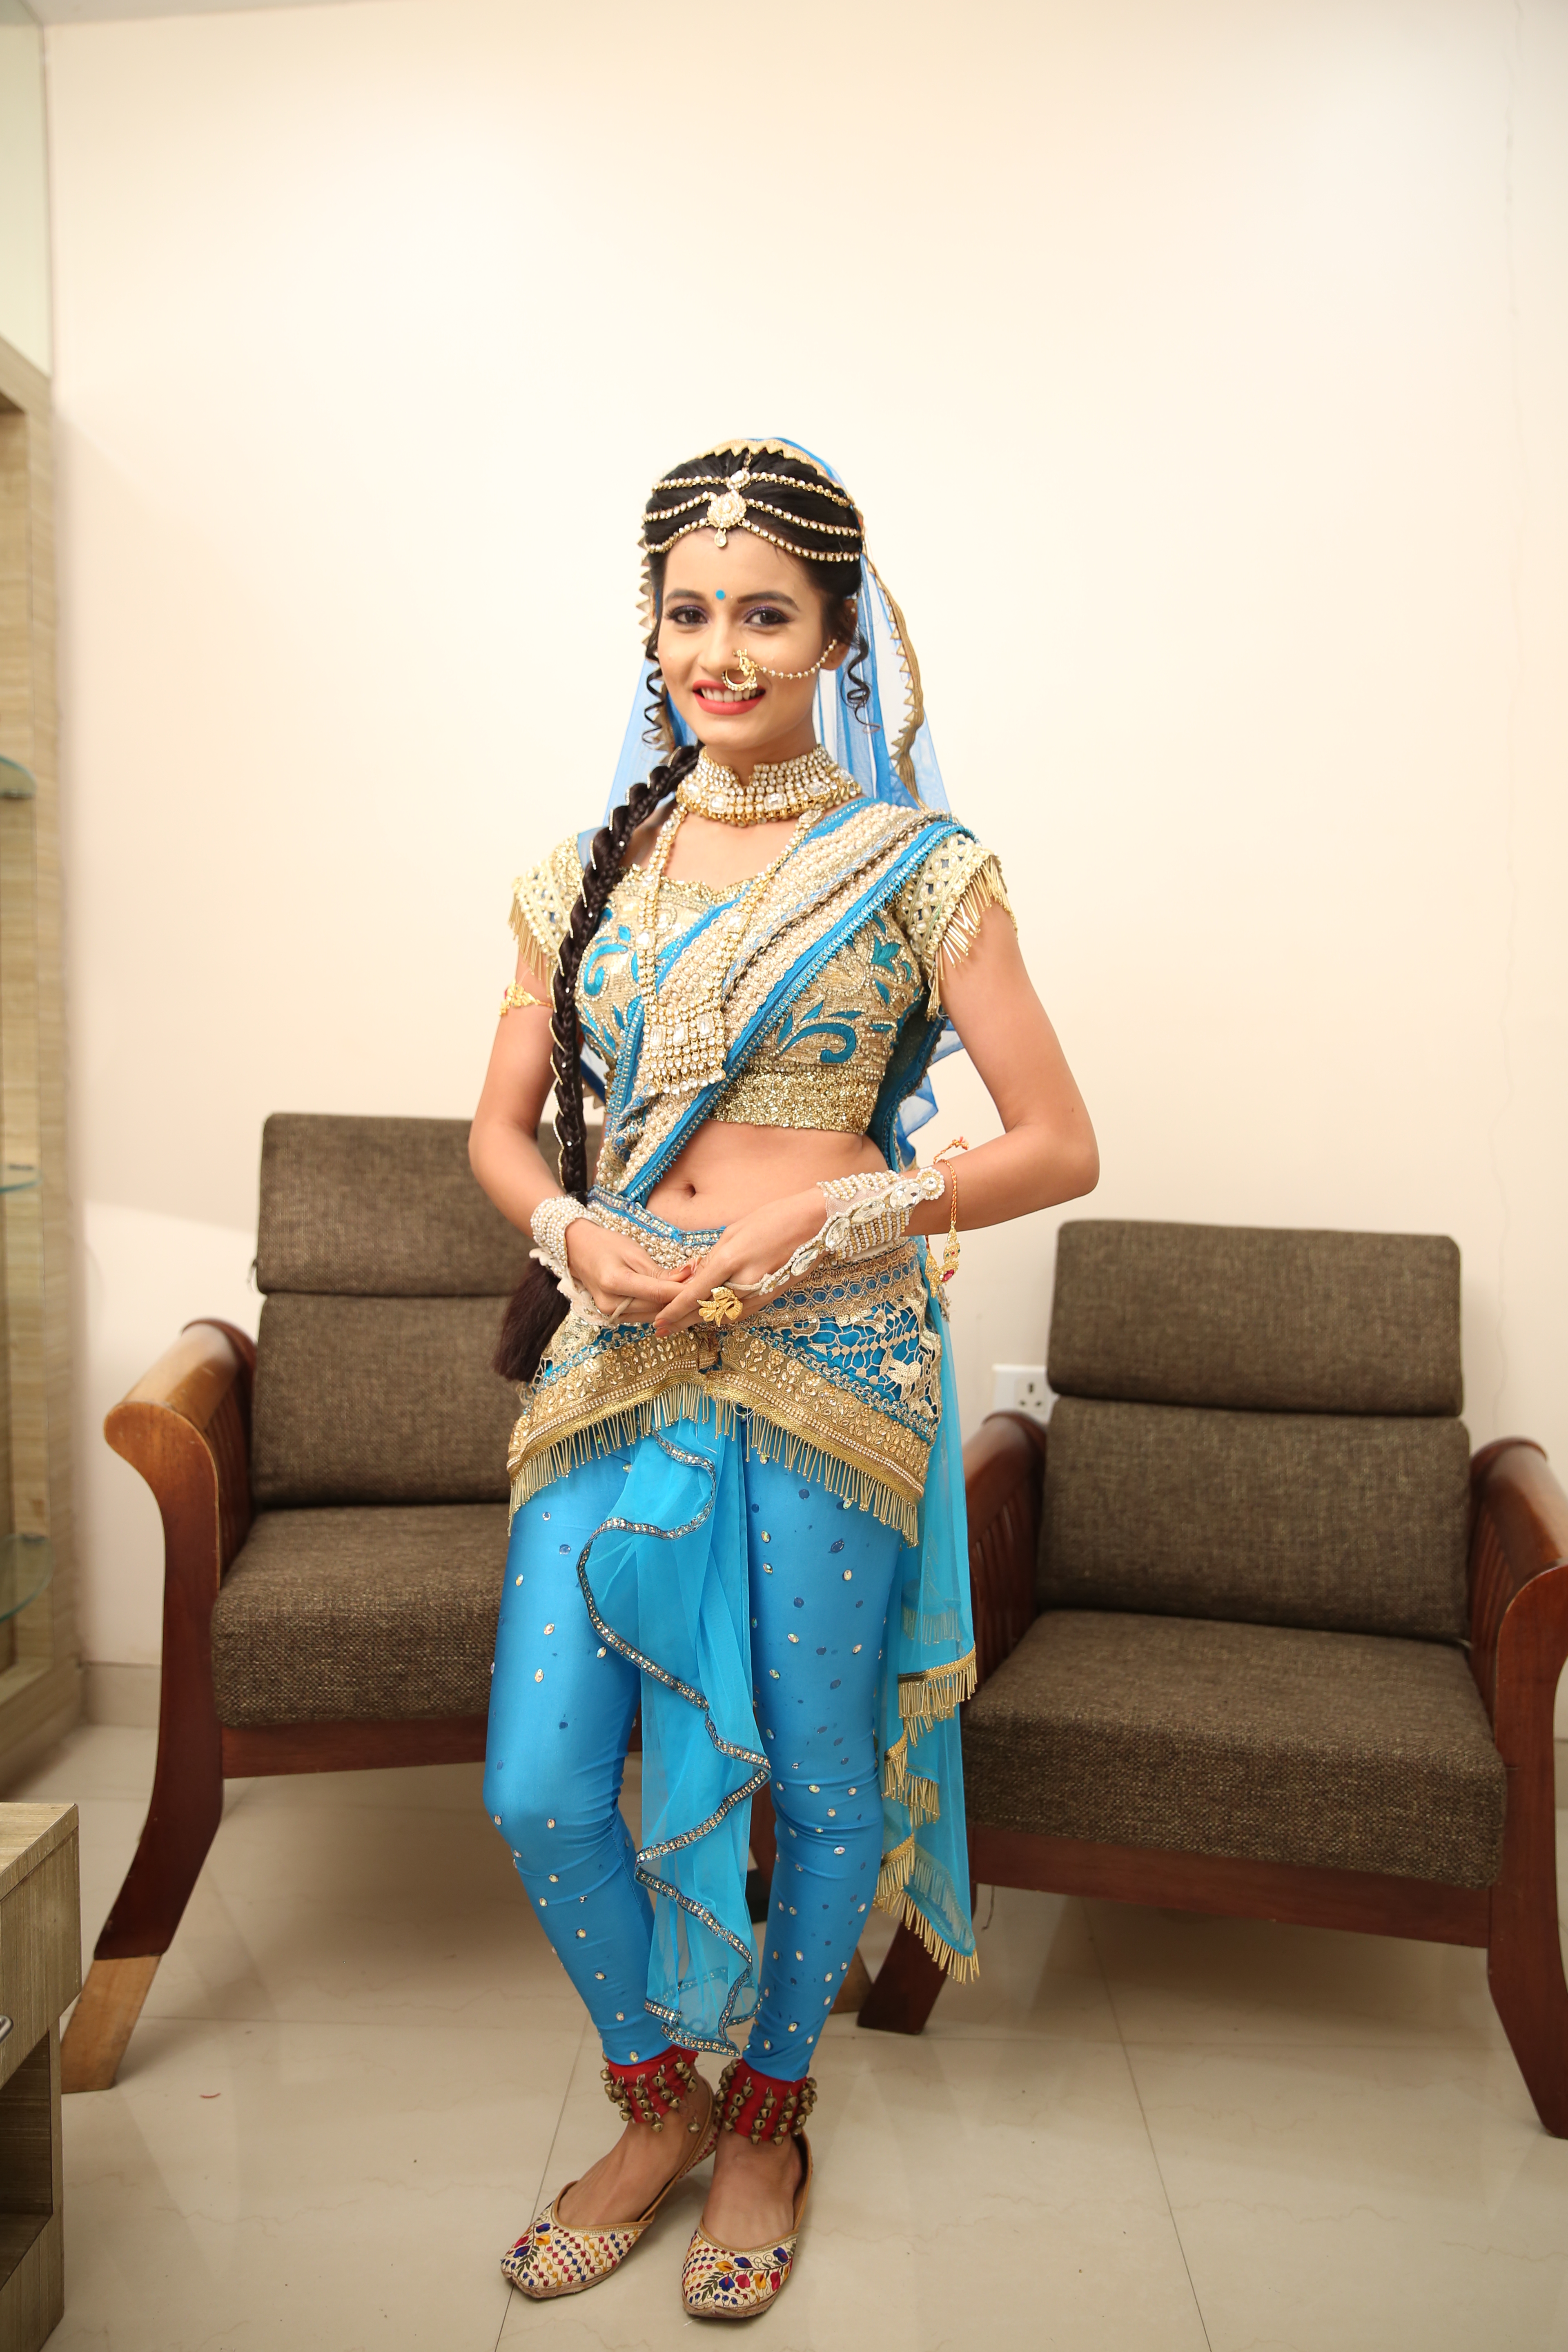 Tara From Satara: Dancer No. 1 contestants go the Bollywood way 1